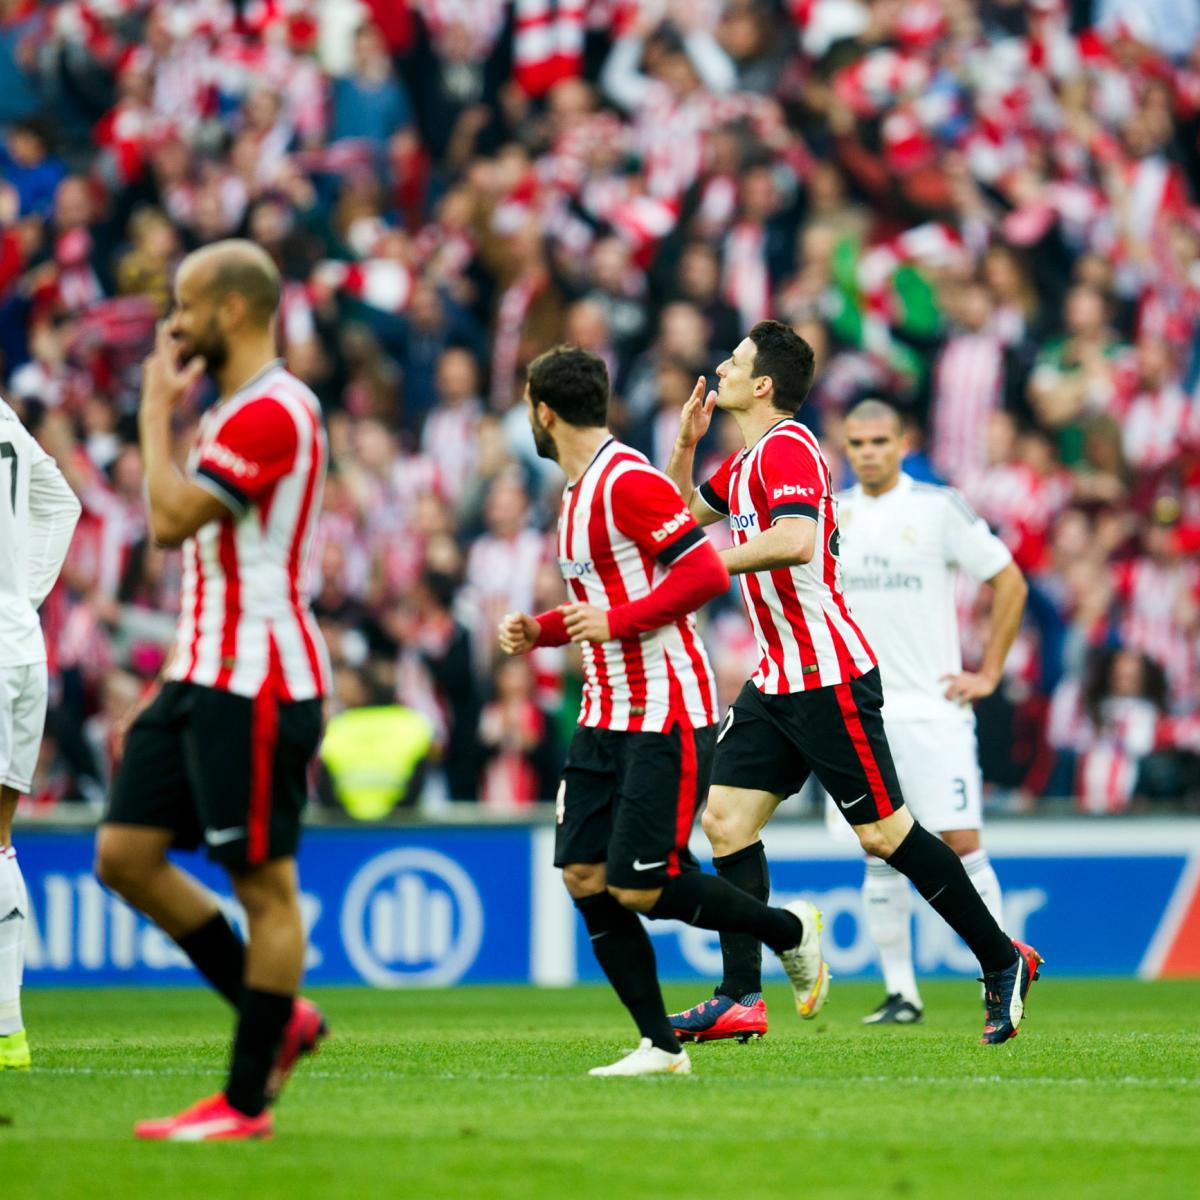 Athletic Bilbao vs. Real Madrid Live Score, Highlights from La Liga